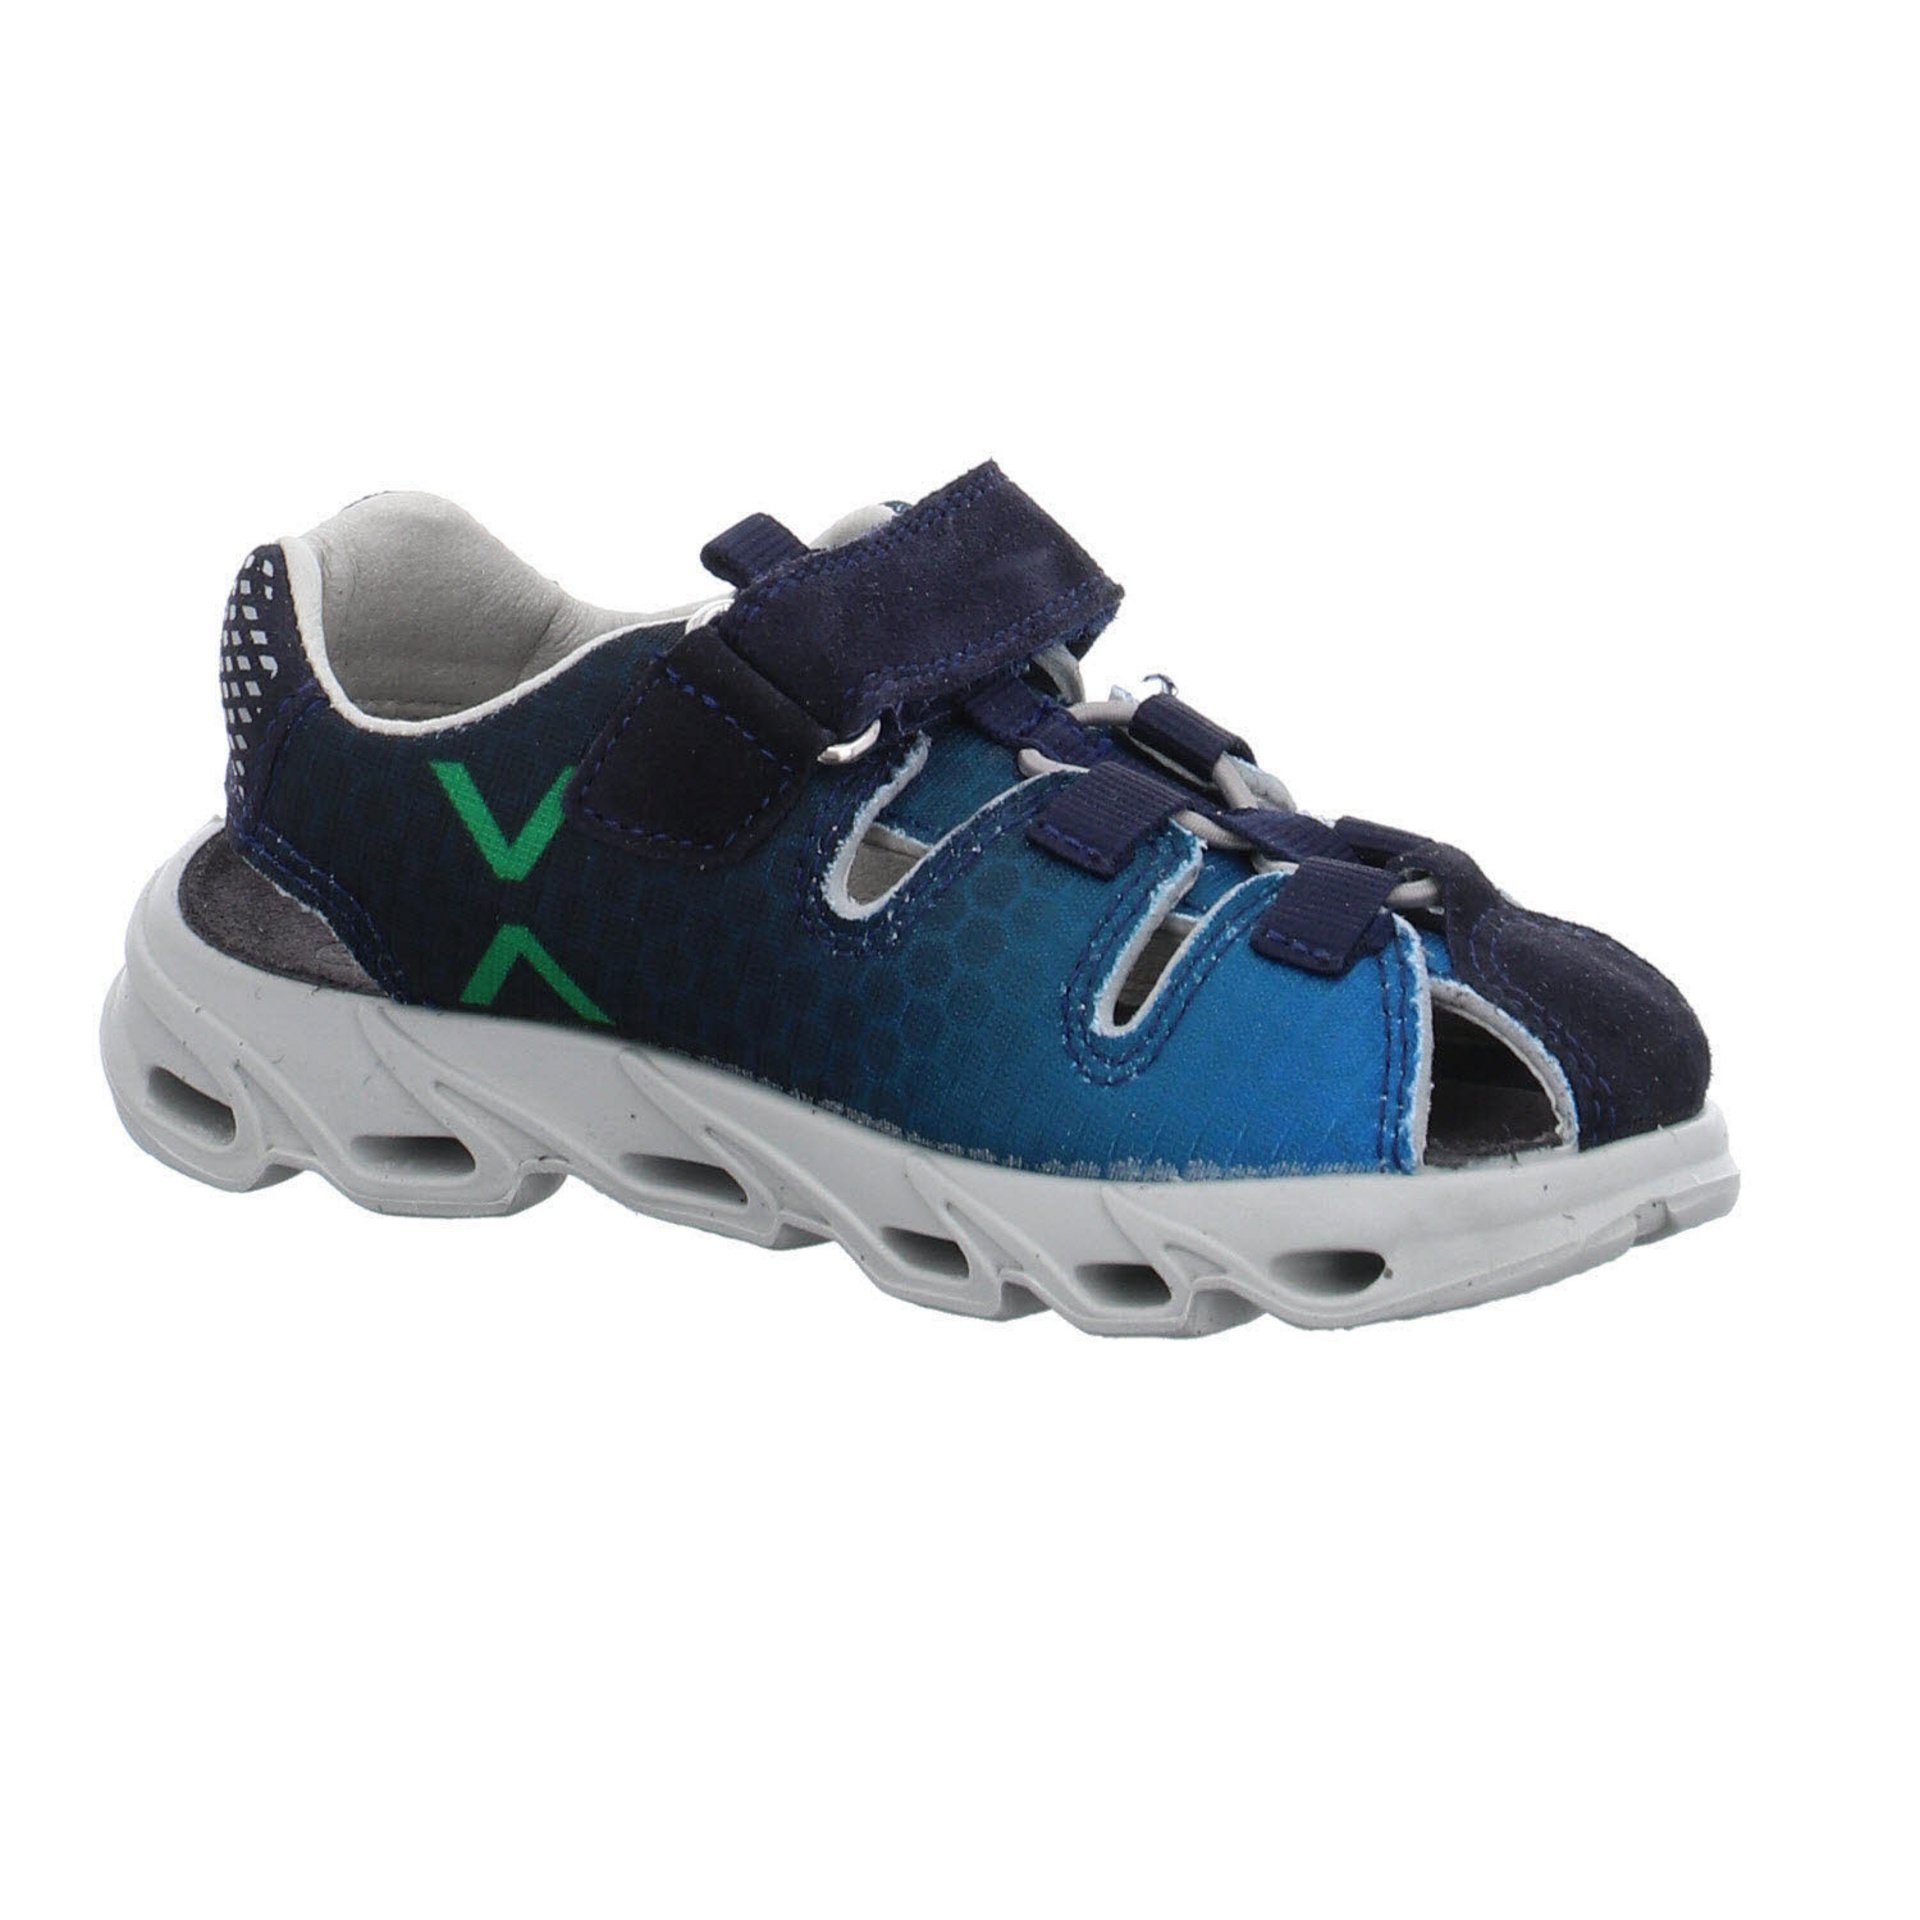 Vado Jungen Kinderschuhe Blau Textil Sandale Sandale Sandalen Schuhe Box